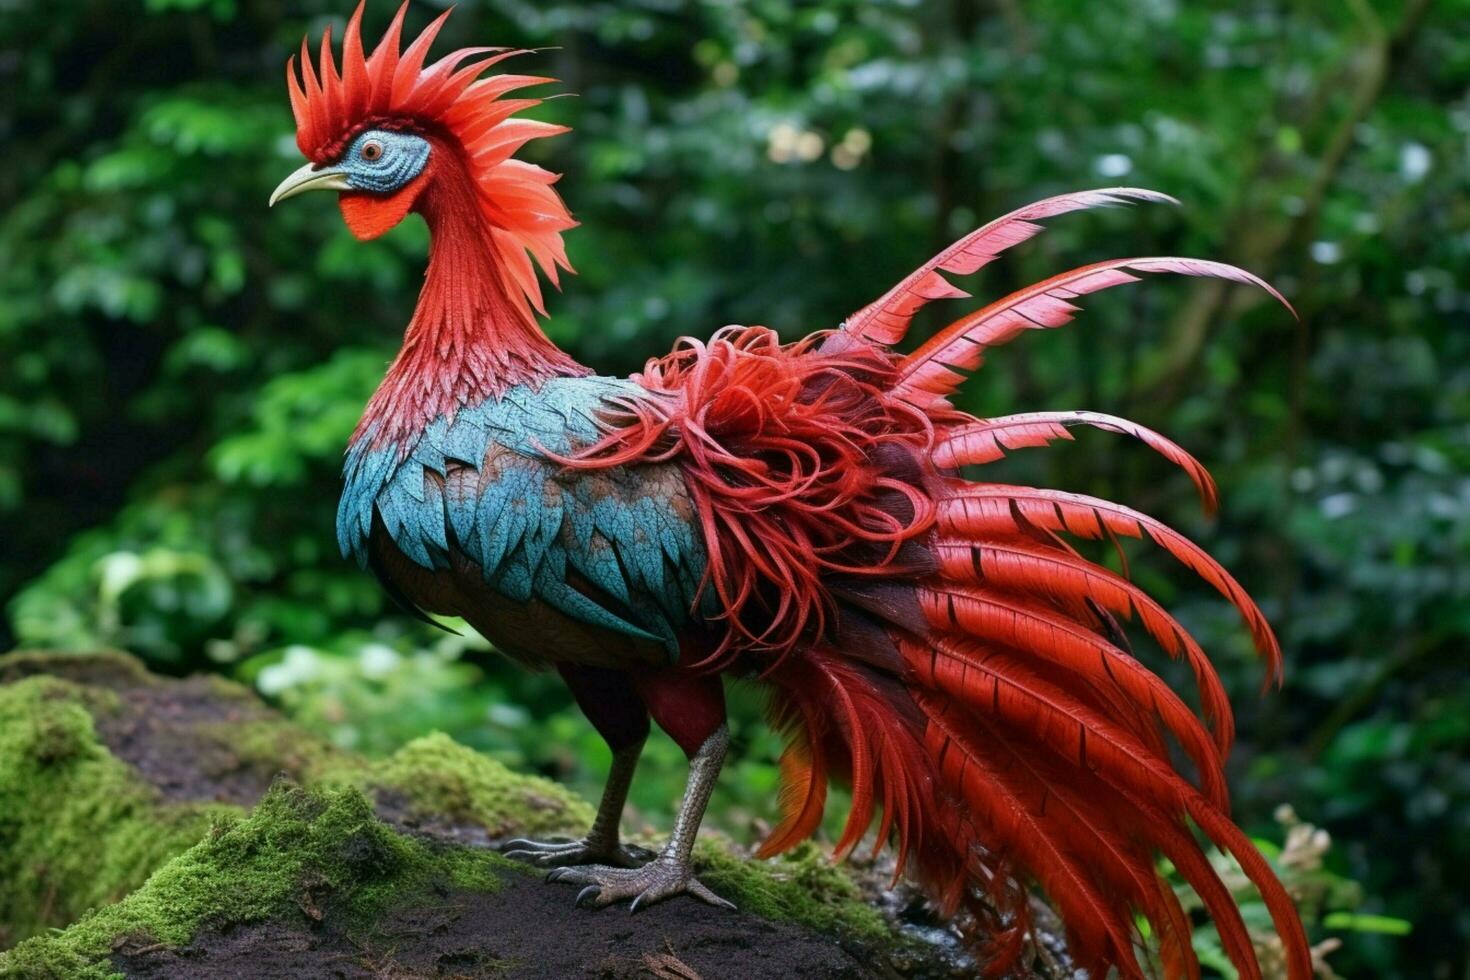 nacional pássaro do Panamá foto